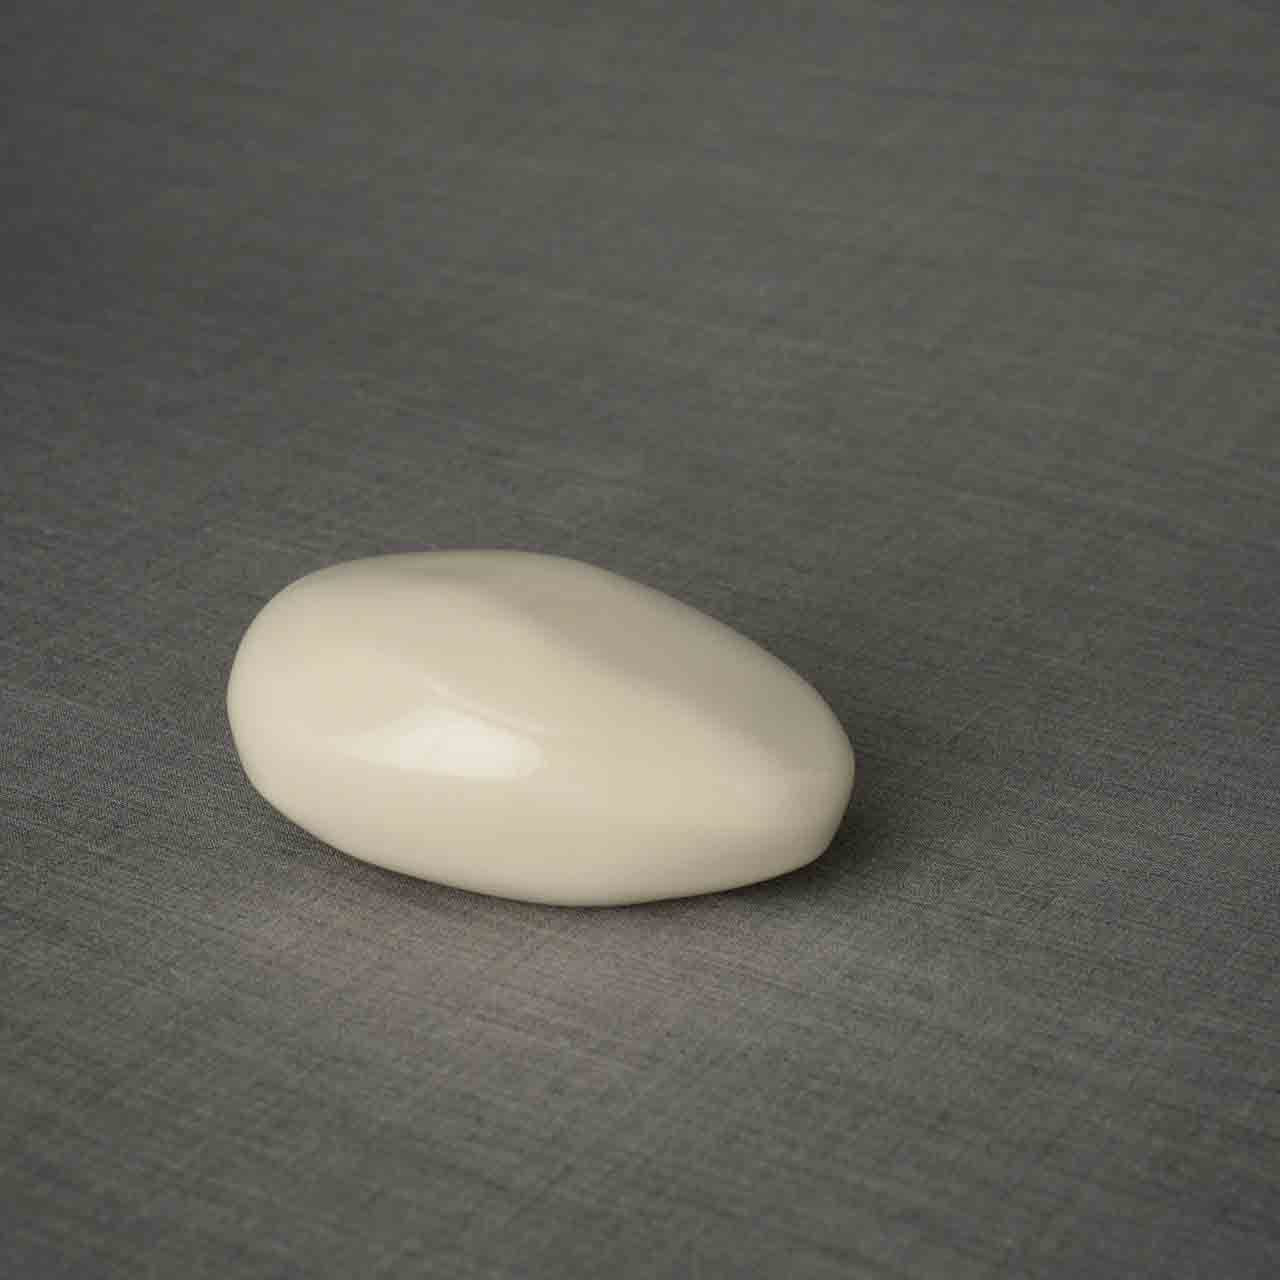 Pebbles Ashes Keepsake Urn in Cream Facing Right Dark Background